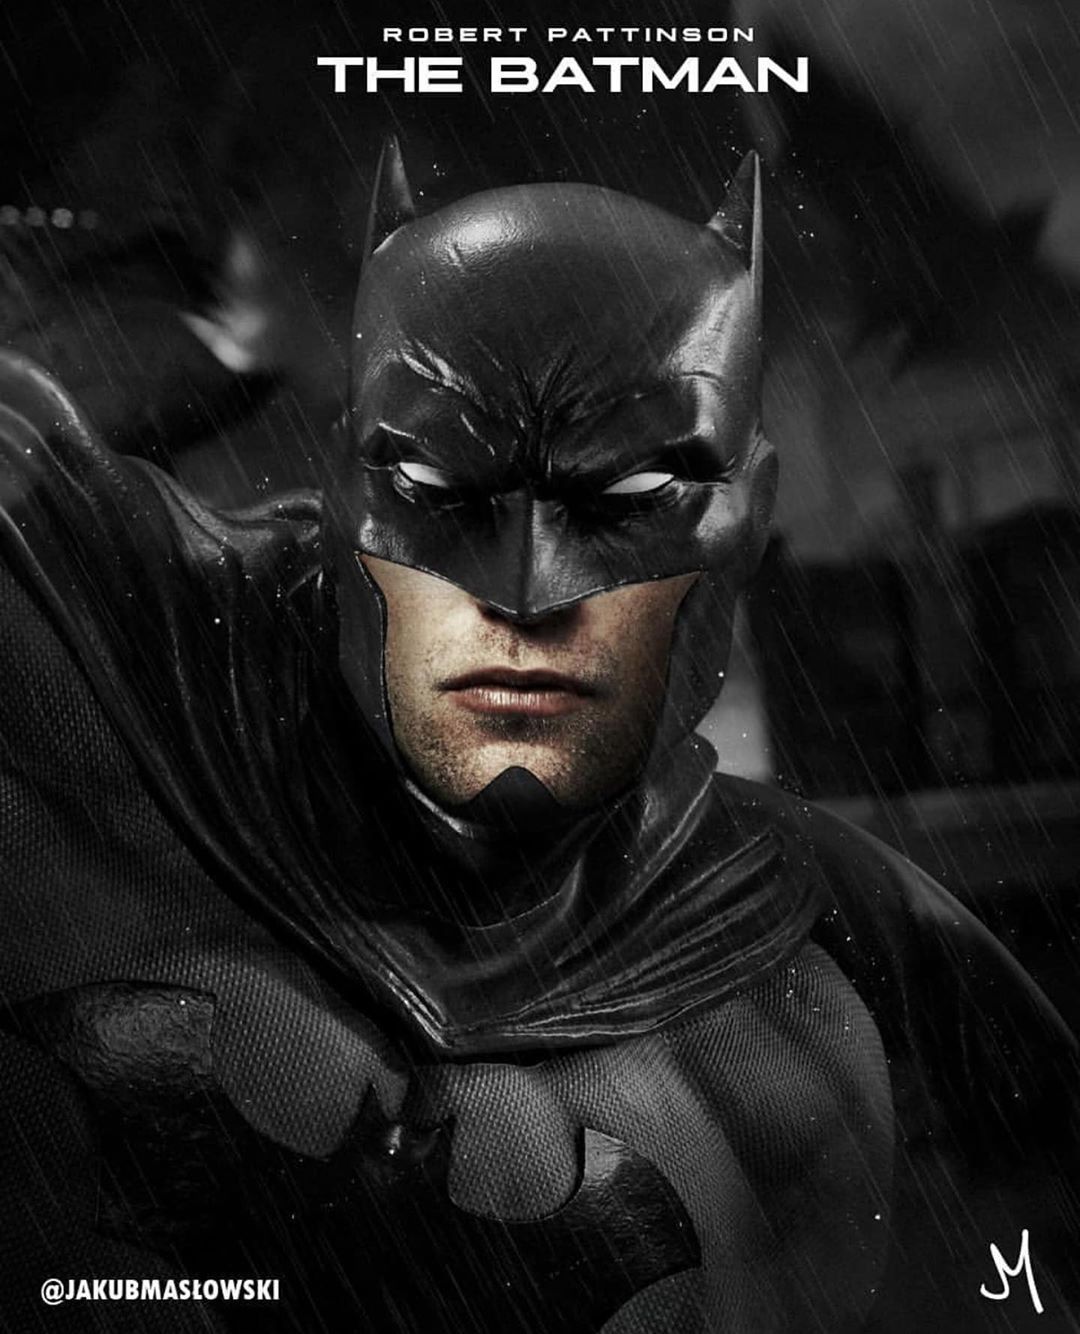 The Batman on Instagram: “Because, he is BATMAAAN!!